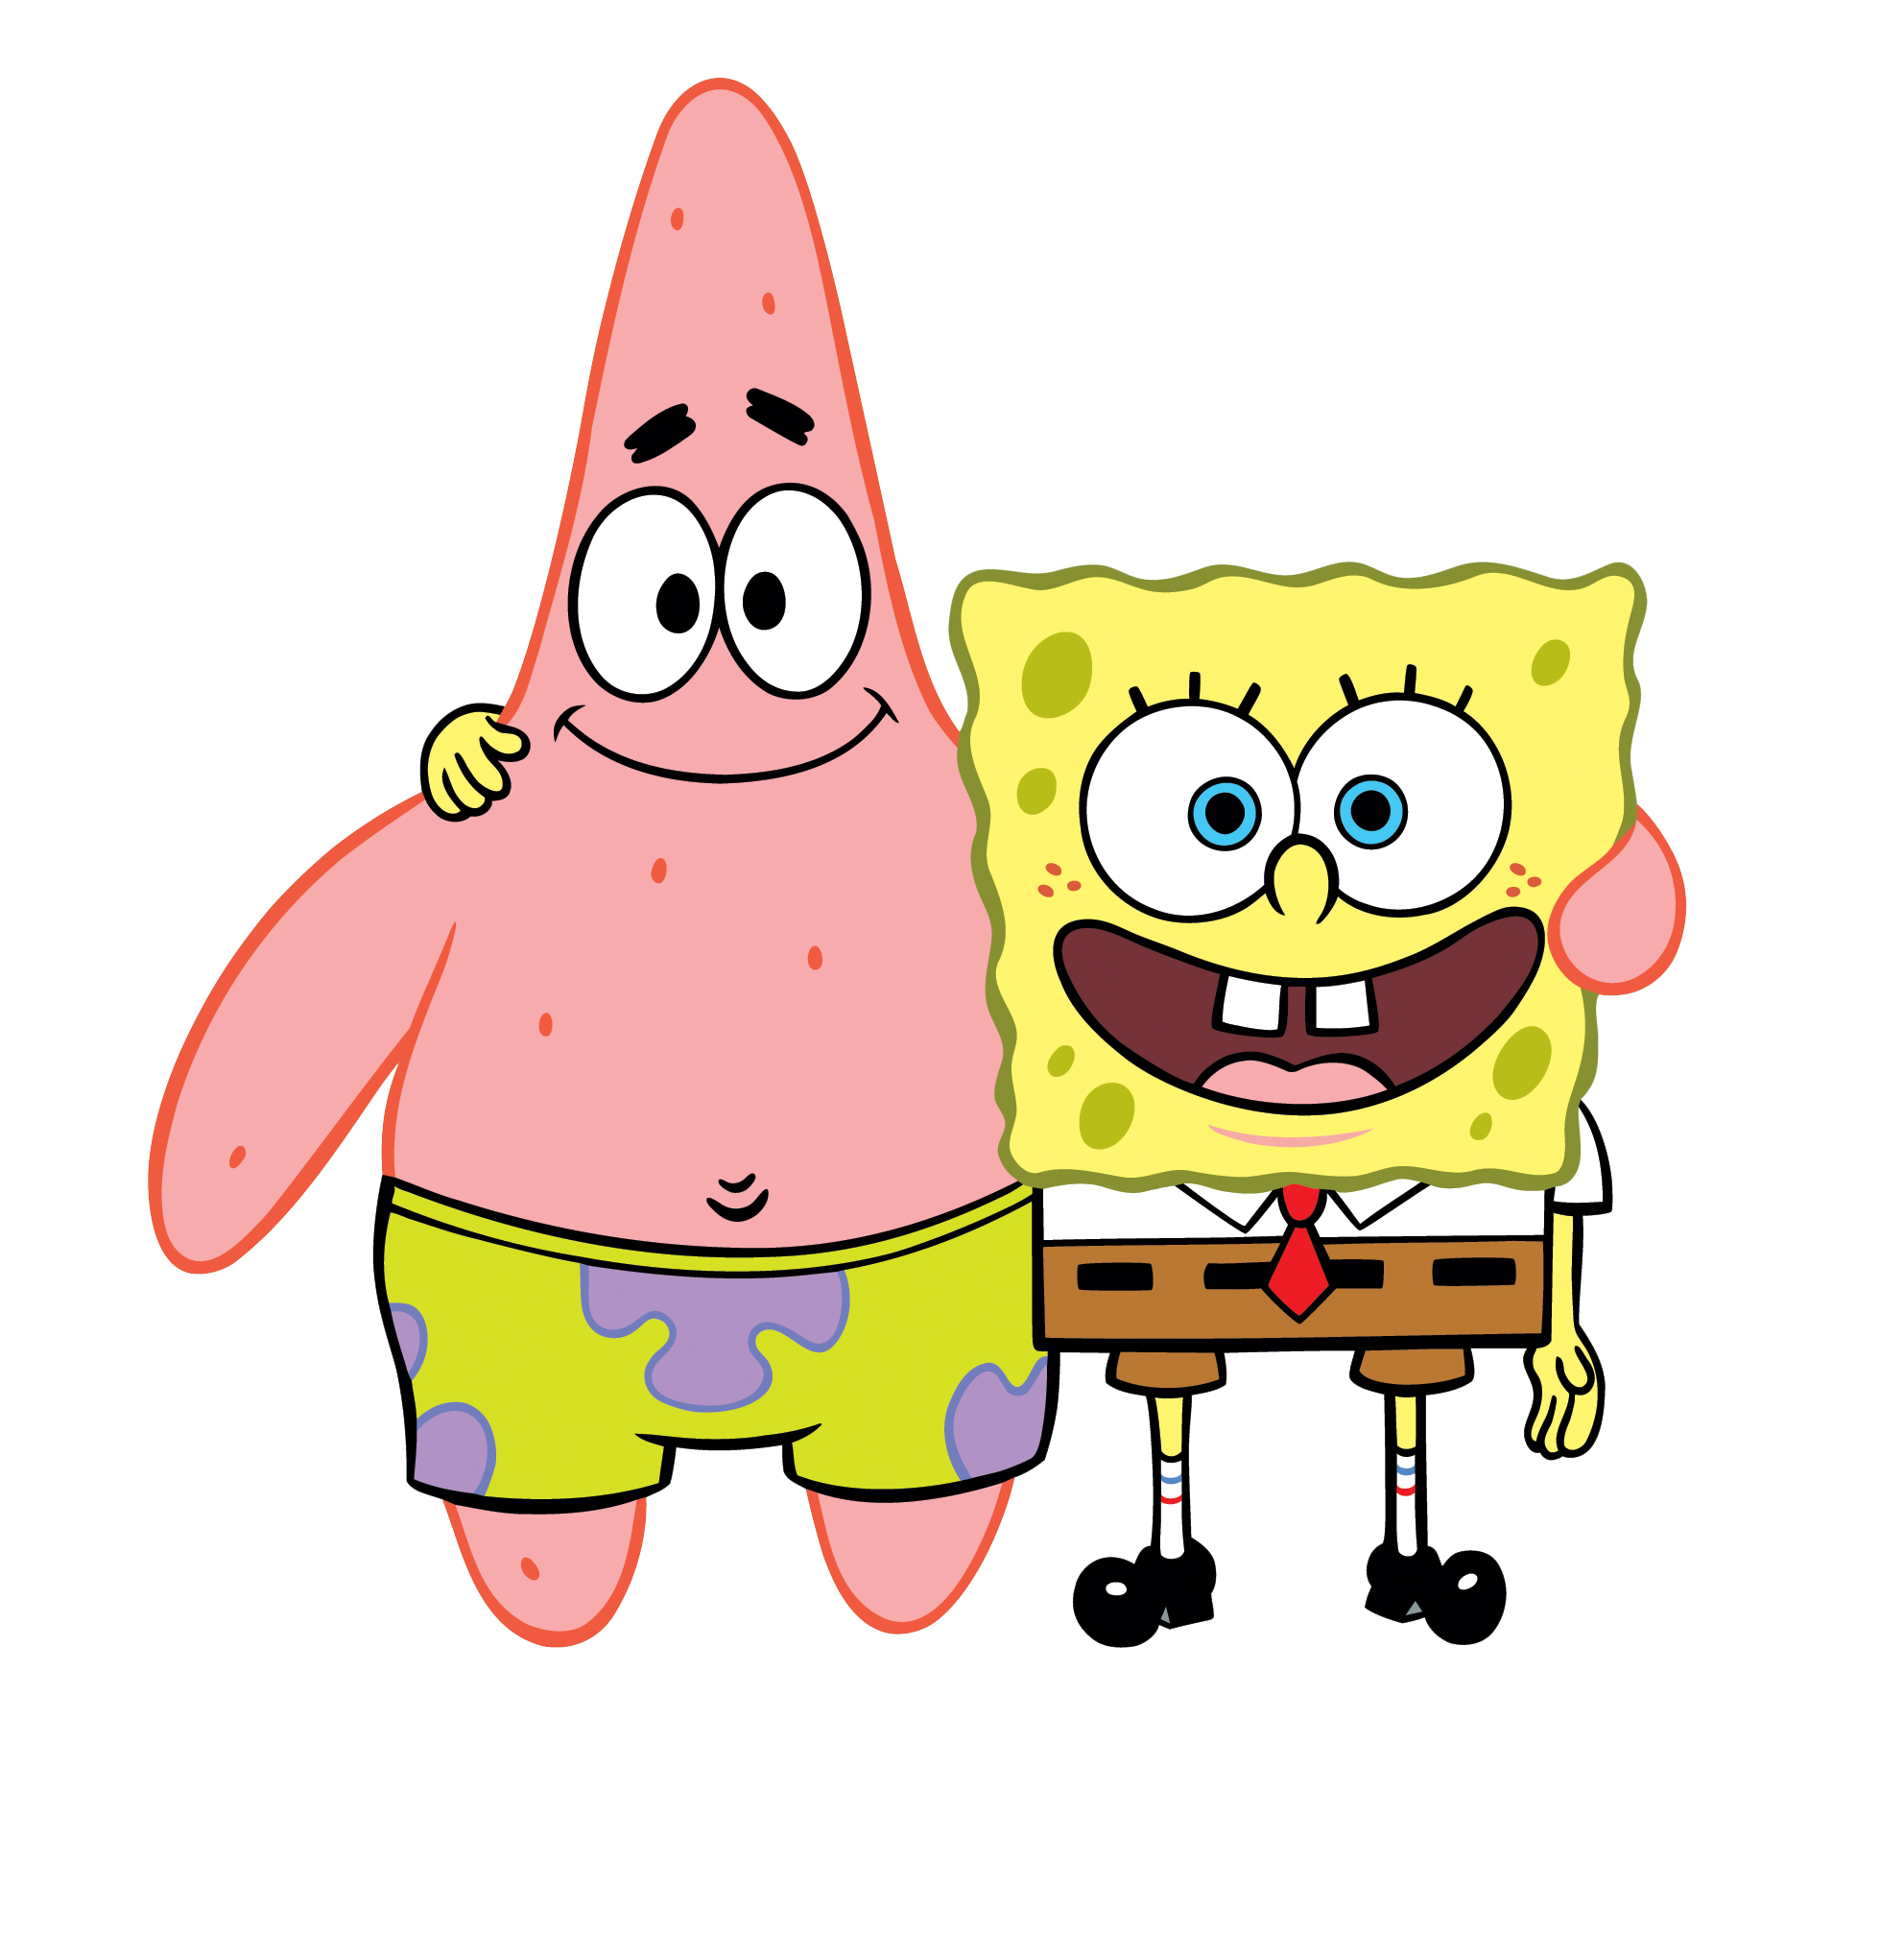 Image - Spongebob-Patrick-spongebob-squarepants-33210740-1984-2014.jpg 